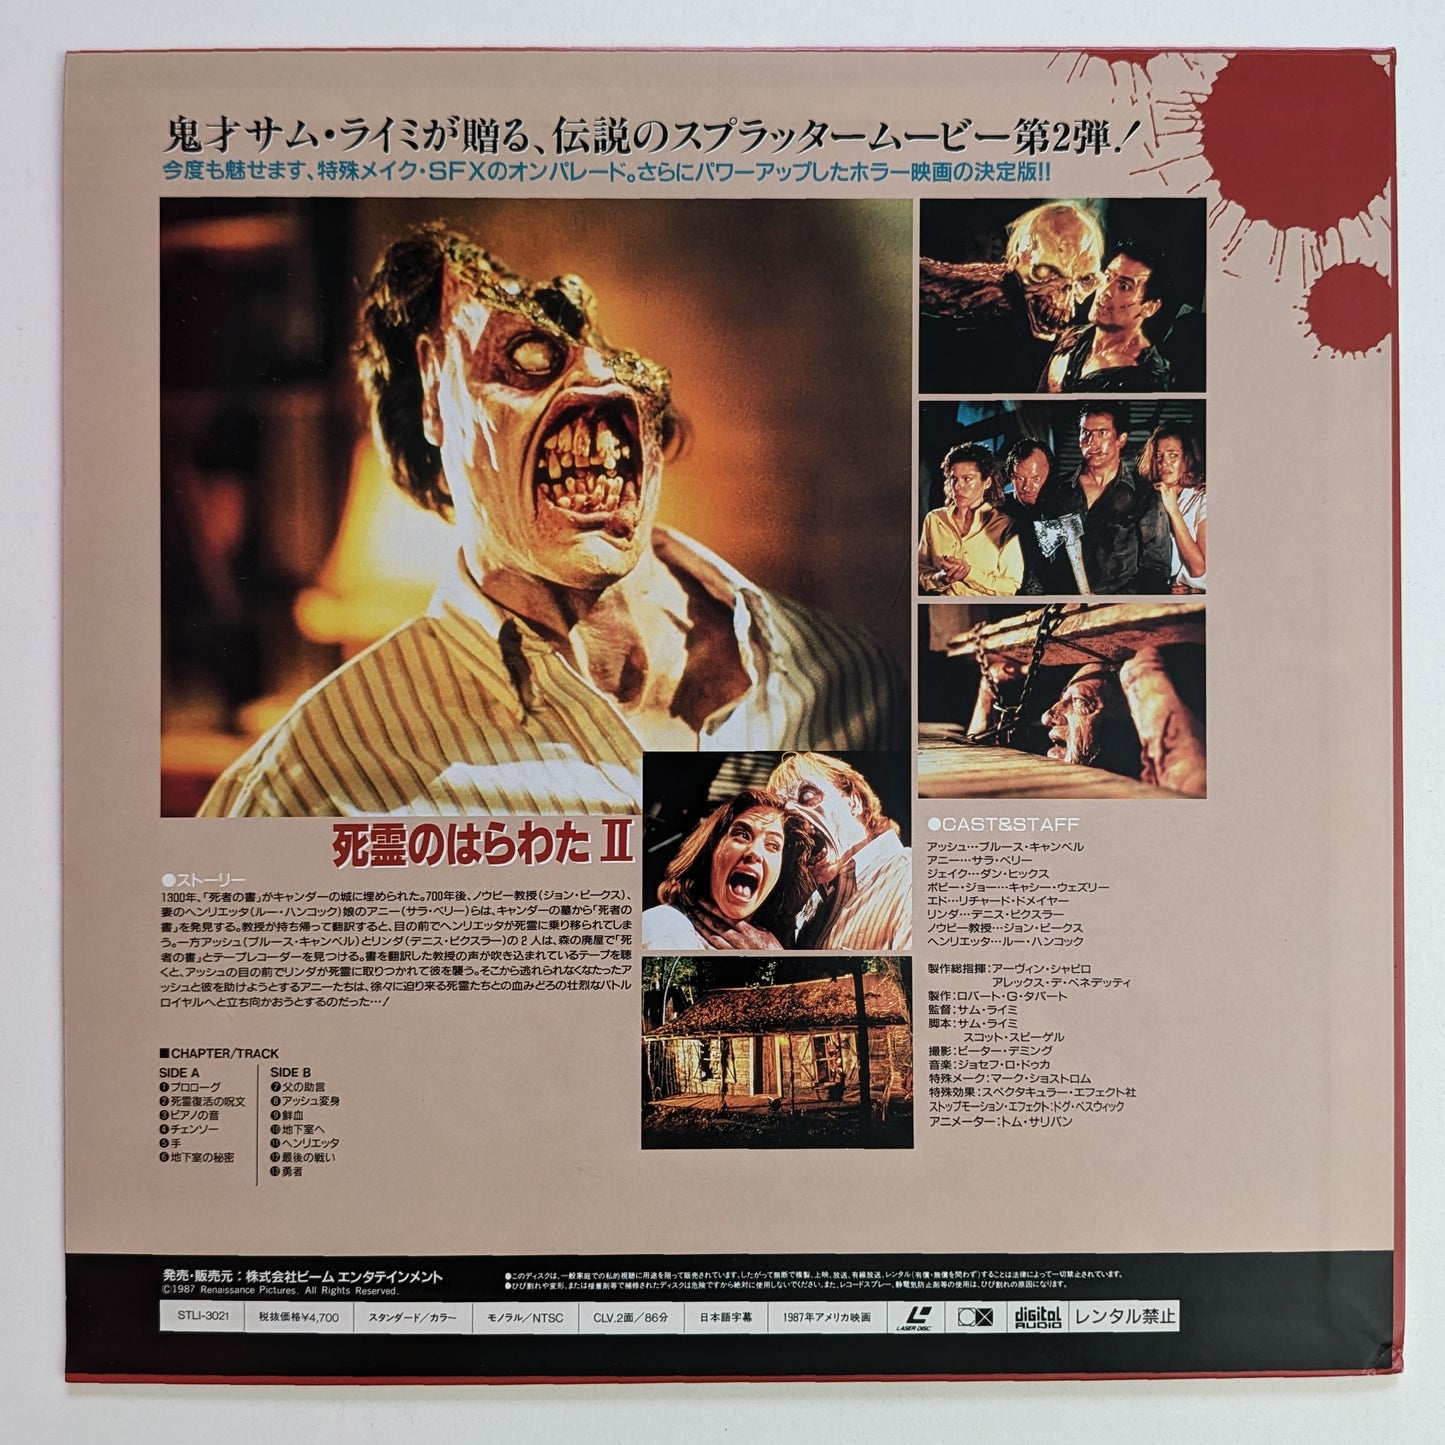 Evil Dead II (1987) Japanese Laserdisc